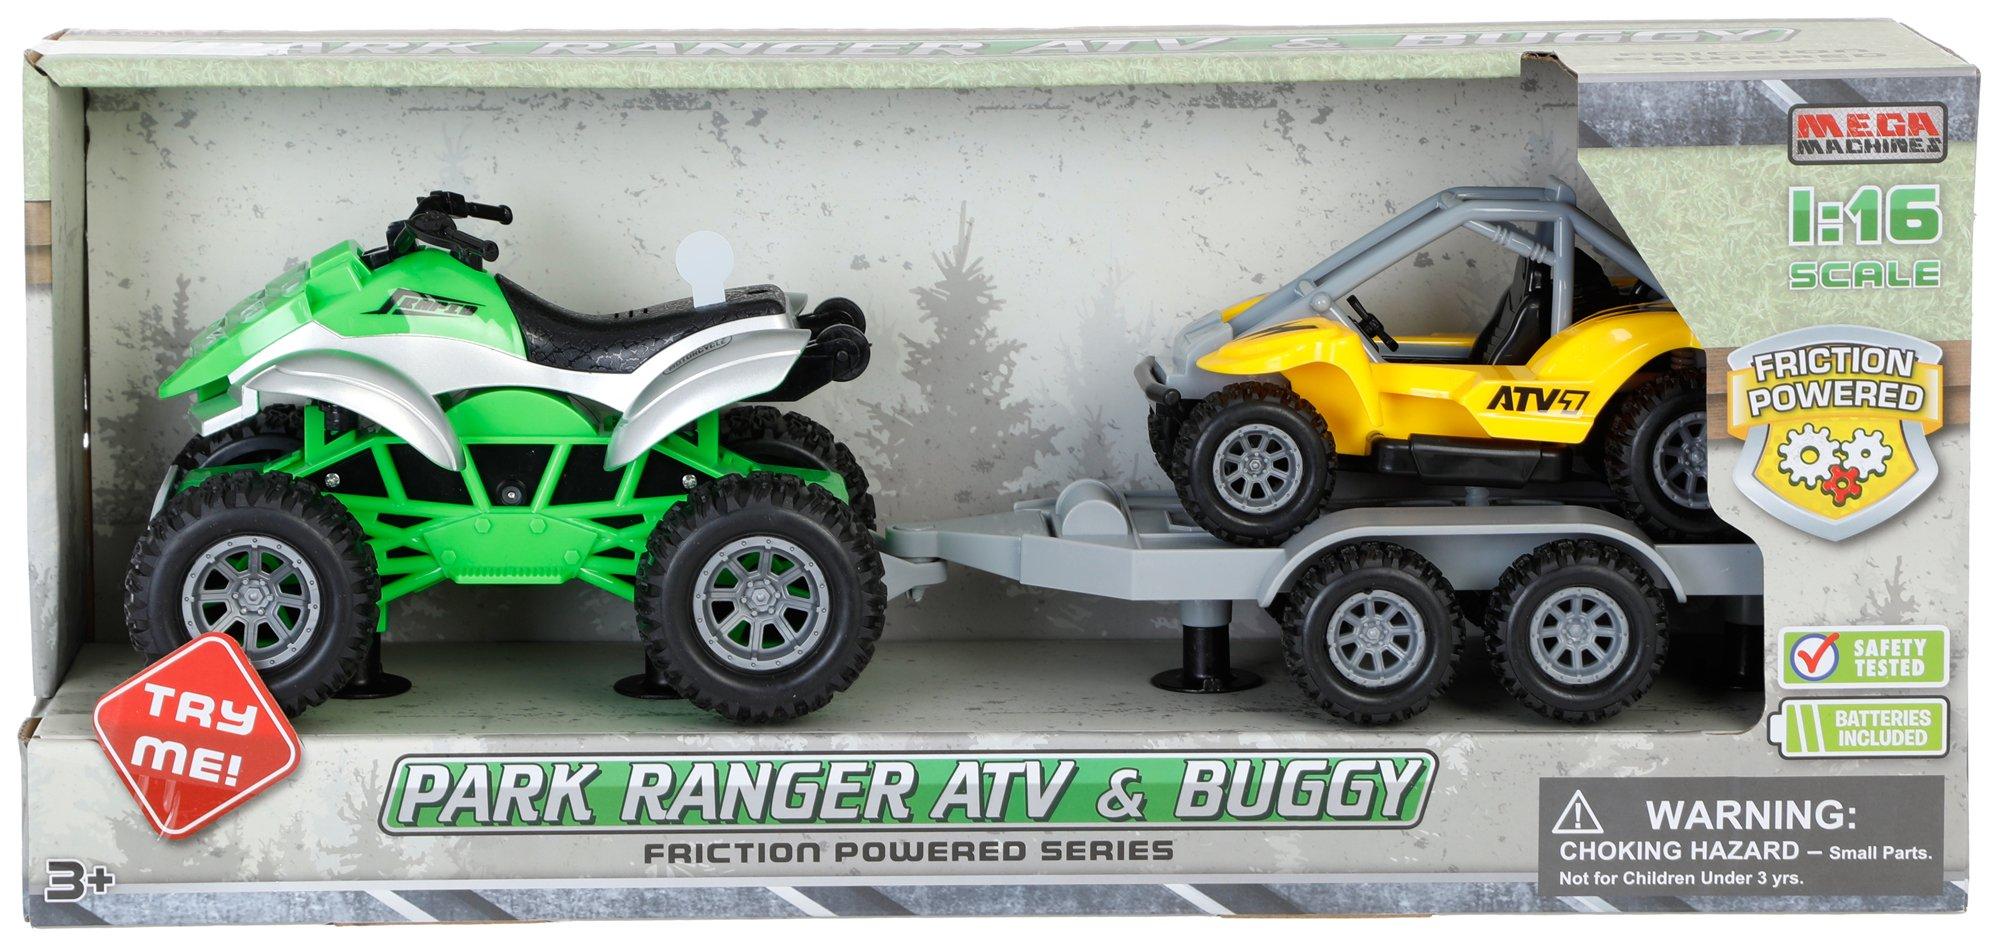 Park Ranger ATV & Buggy